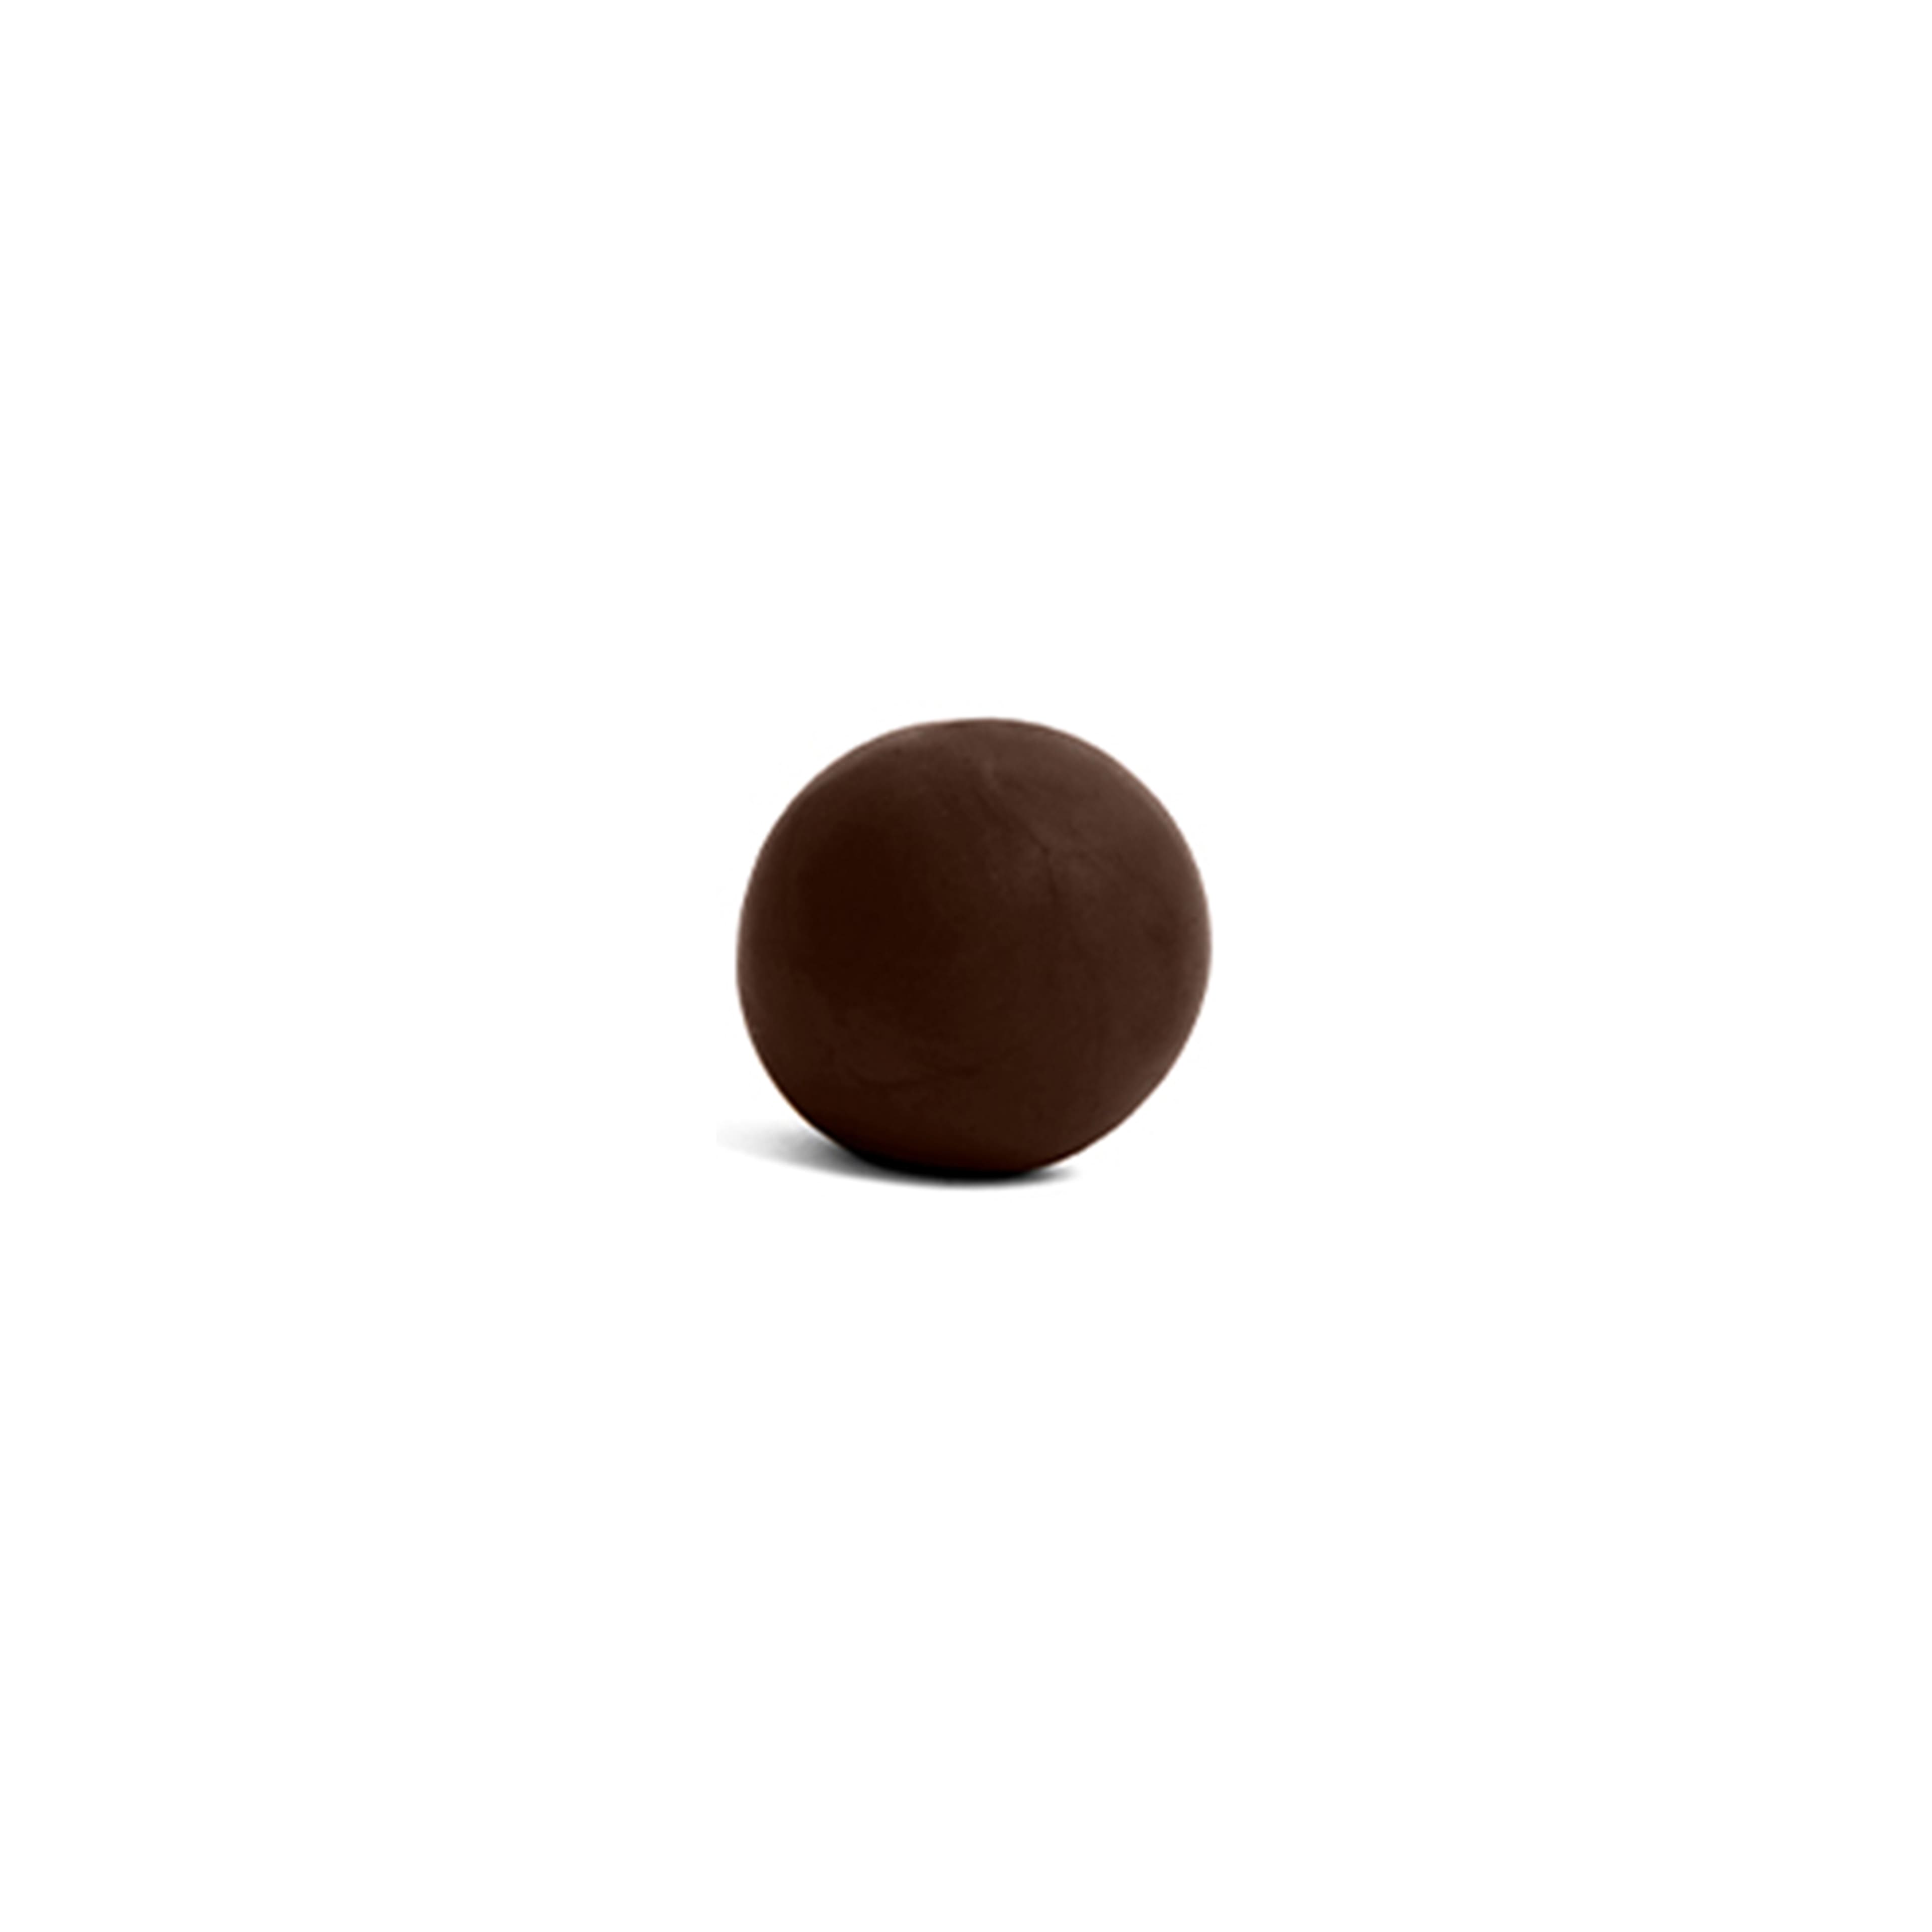 Satin Ice Chocopan Modeling Chocolate, Ivory, 10 Lb : Target